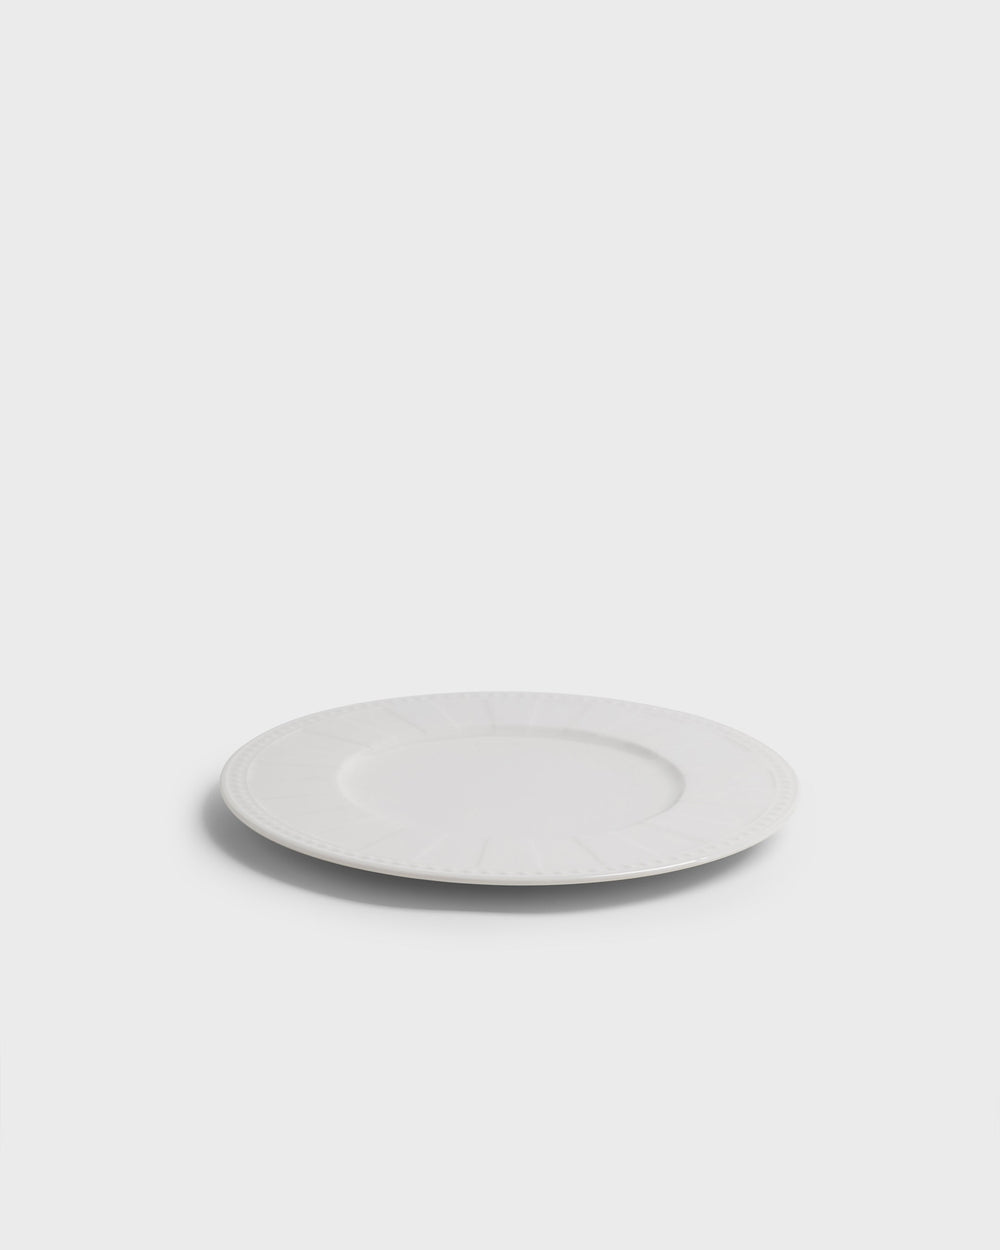 Tania Bulhoes Dessert Plate Branco Marfim